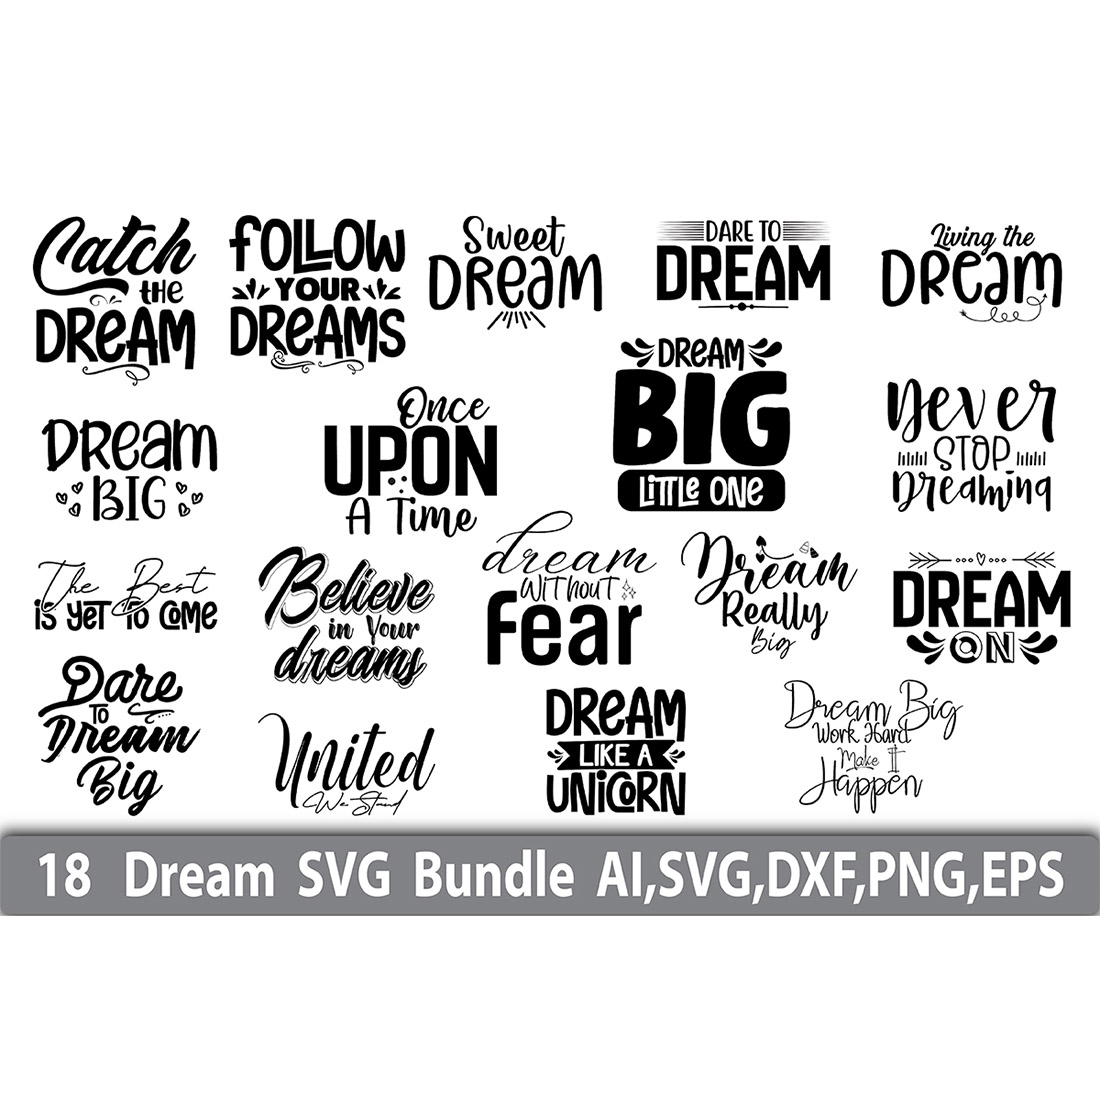 Typography T-shirt Dreams Design SVG Bundle cover image.